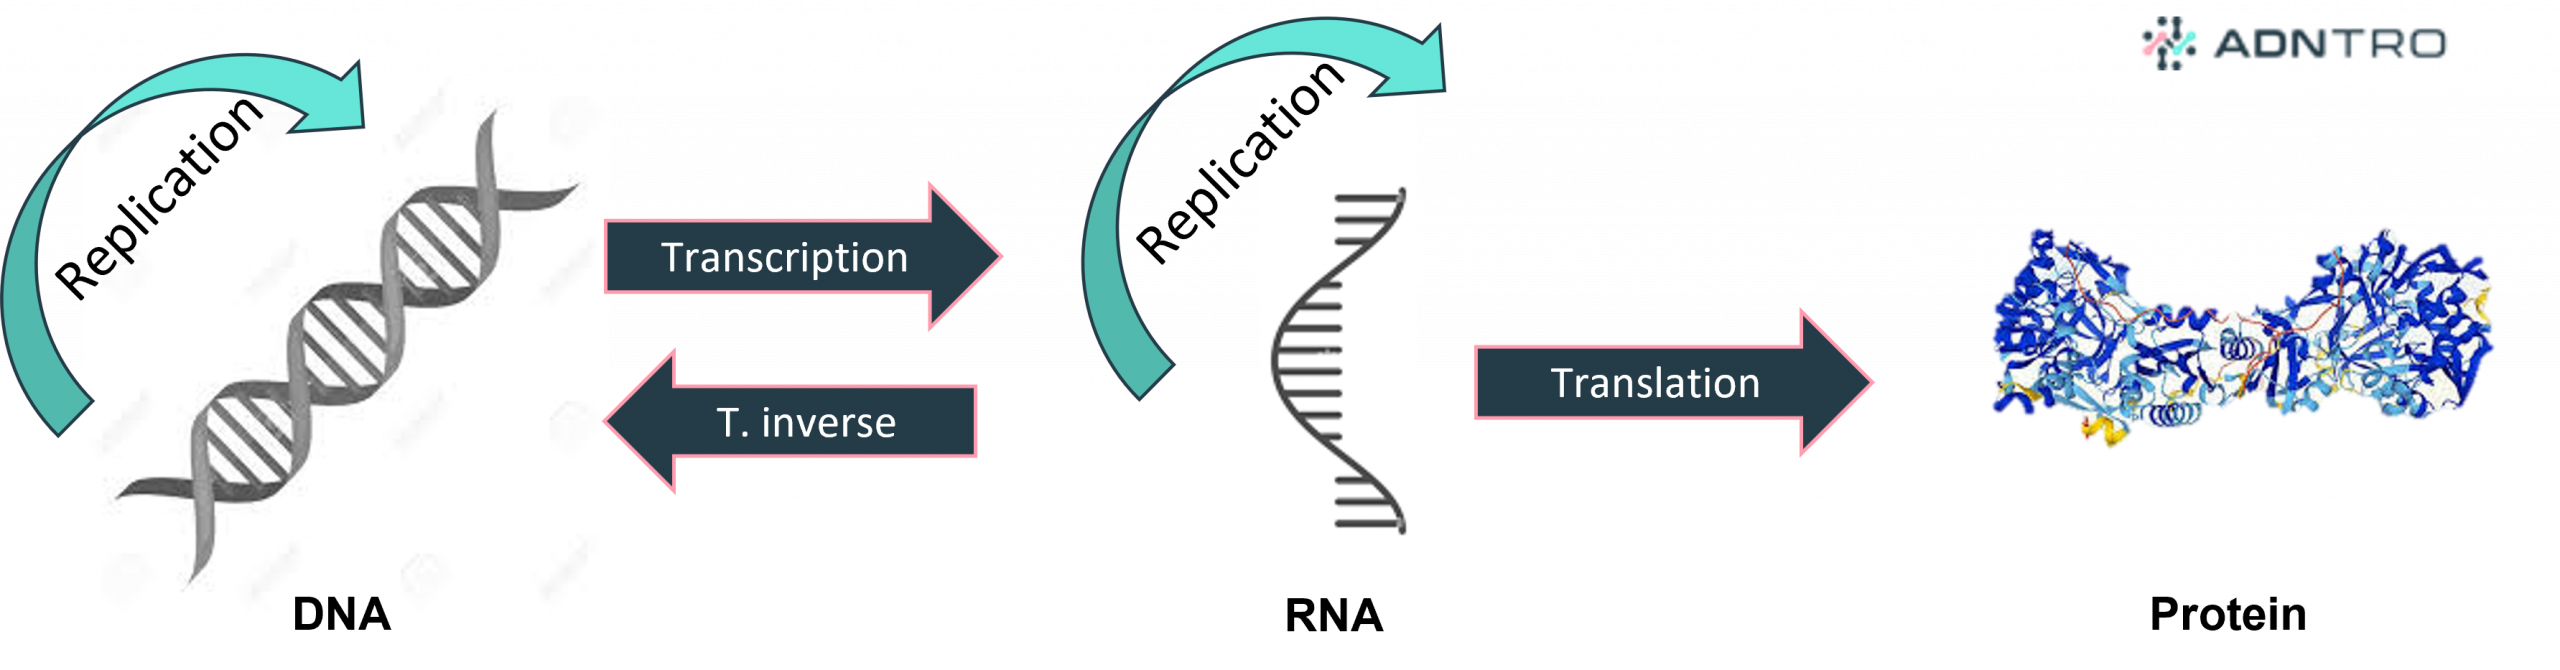 Central dogma of molecular biology extended - replication, transcription, reverse transcription and translation.